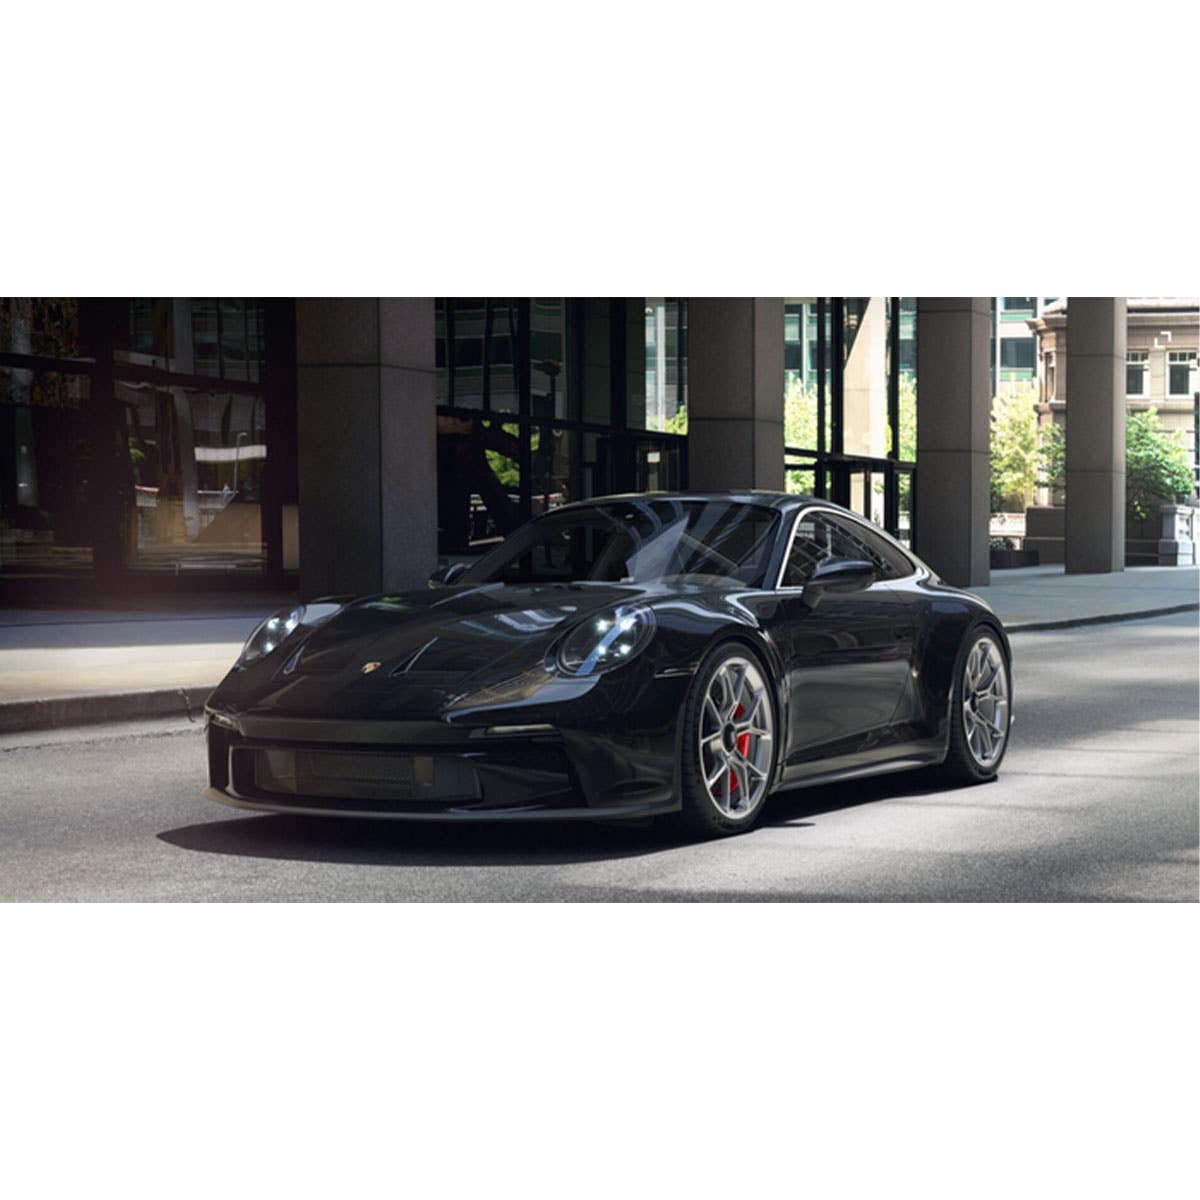 PORSCHE 911 (992) GT3 TOURING - 2022 - BLACK W/SILVER WHEELS - 1:18 Scale Resin Model Car